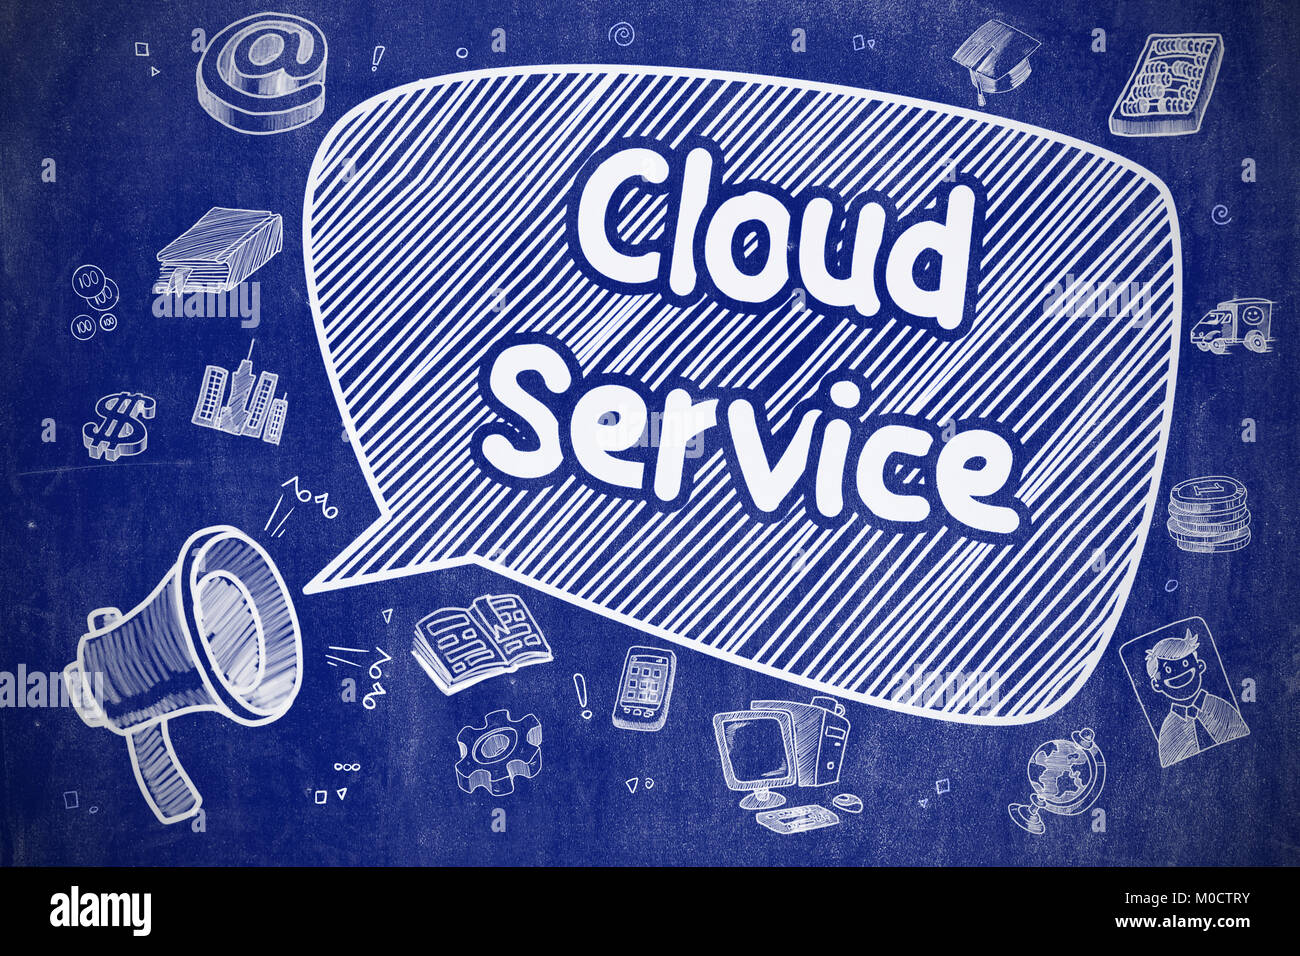 Cloud Service - Hand Drawn Illustration on Blue Chalkboard. Stock Photo